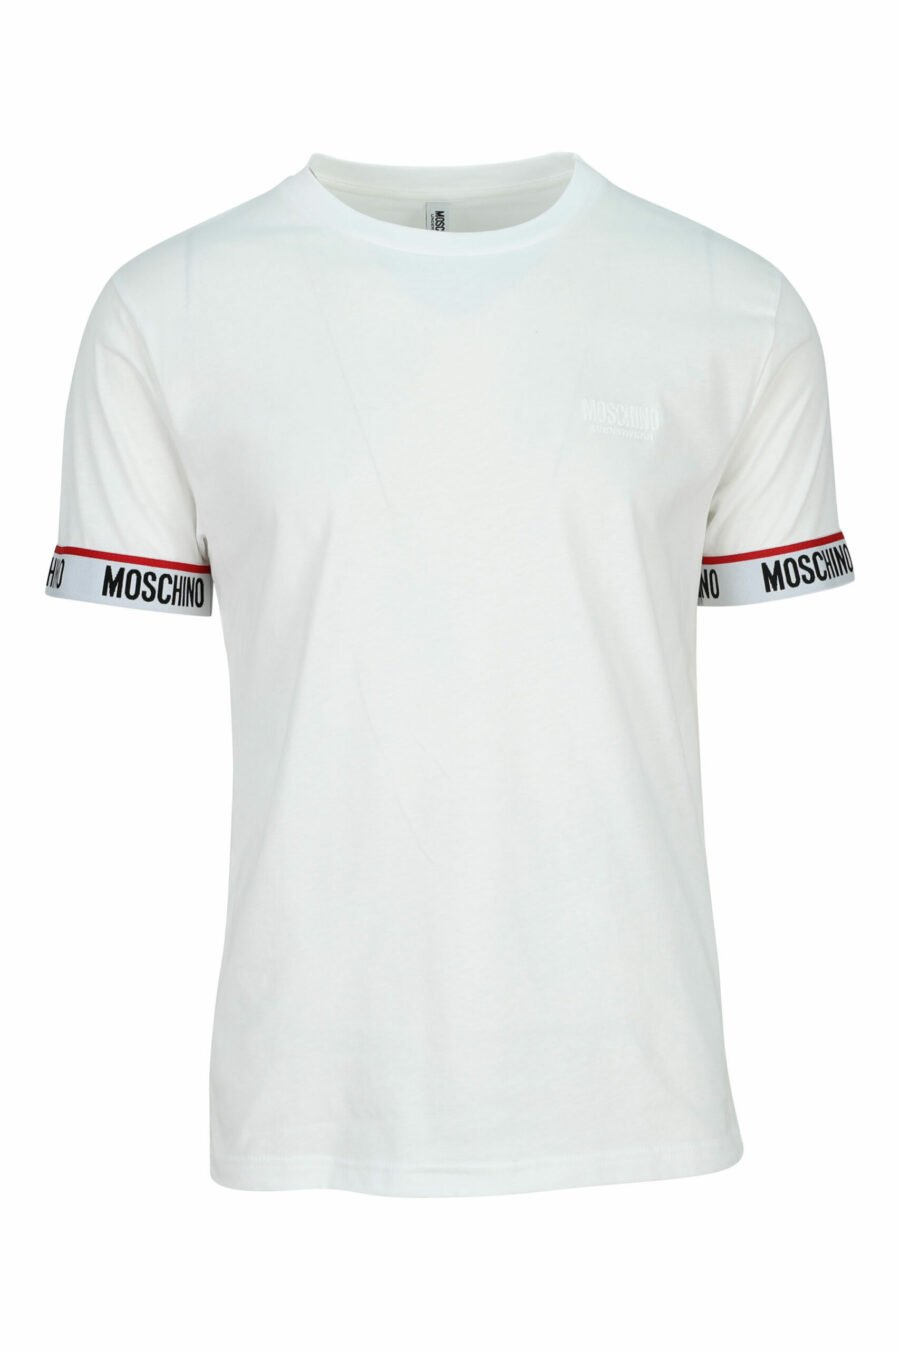 Camiseta blanca con logo blanco en mangas - 667113604565 scaled